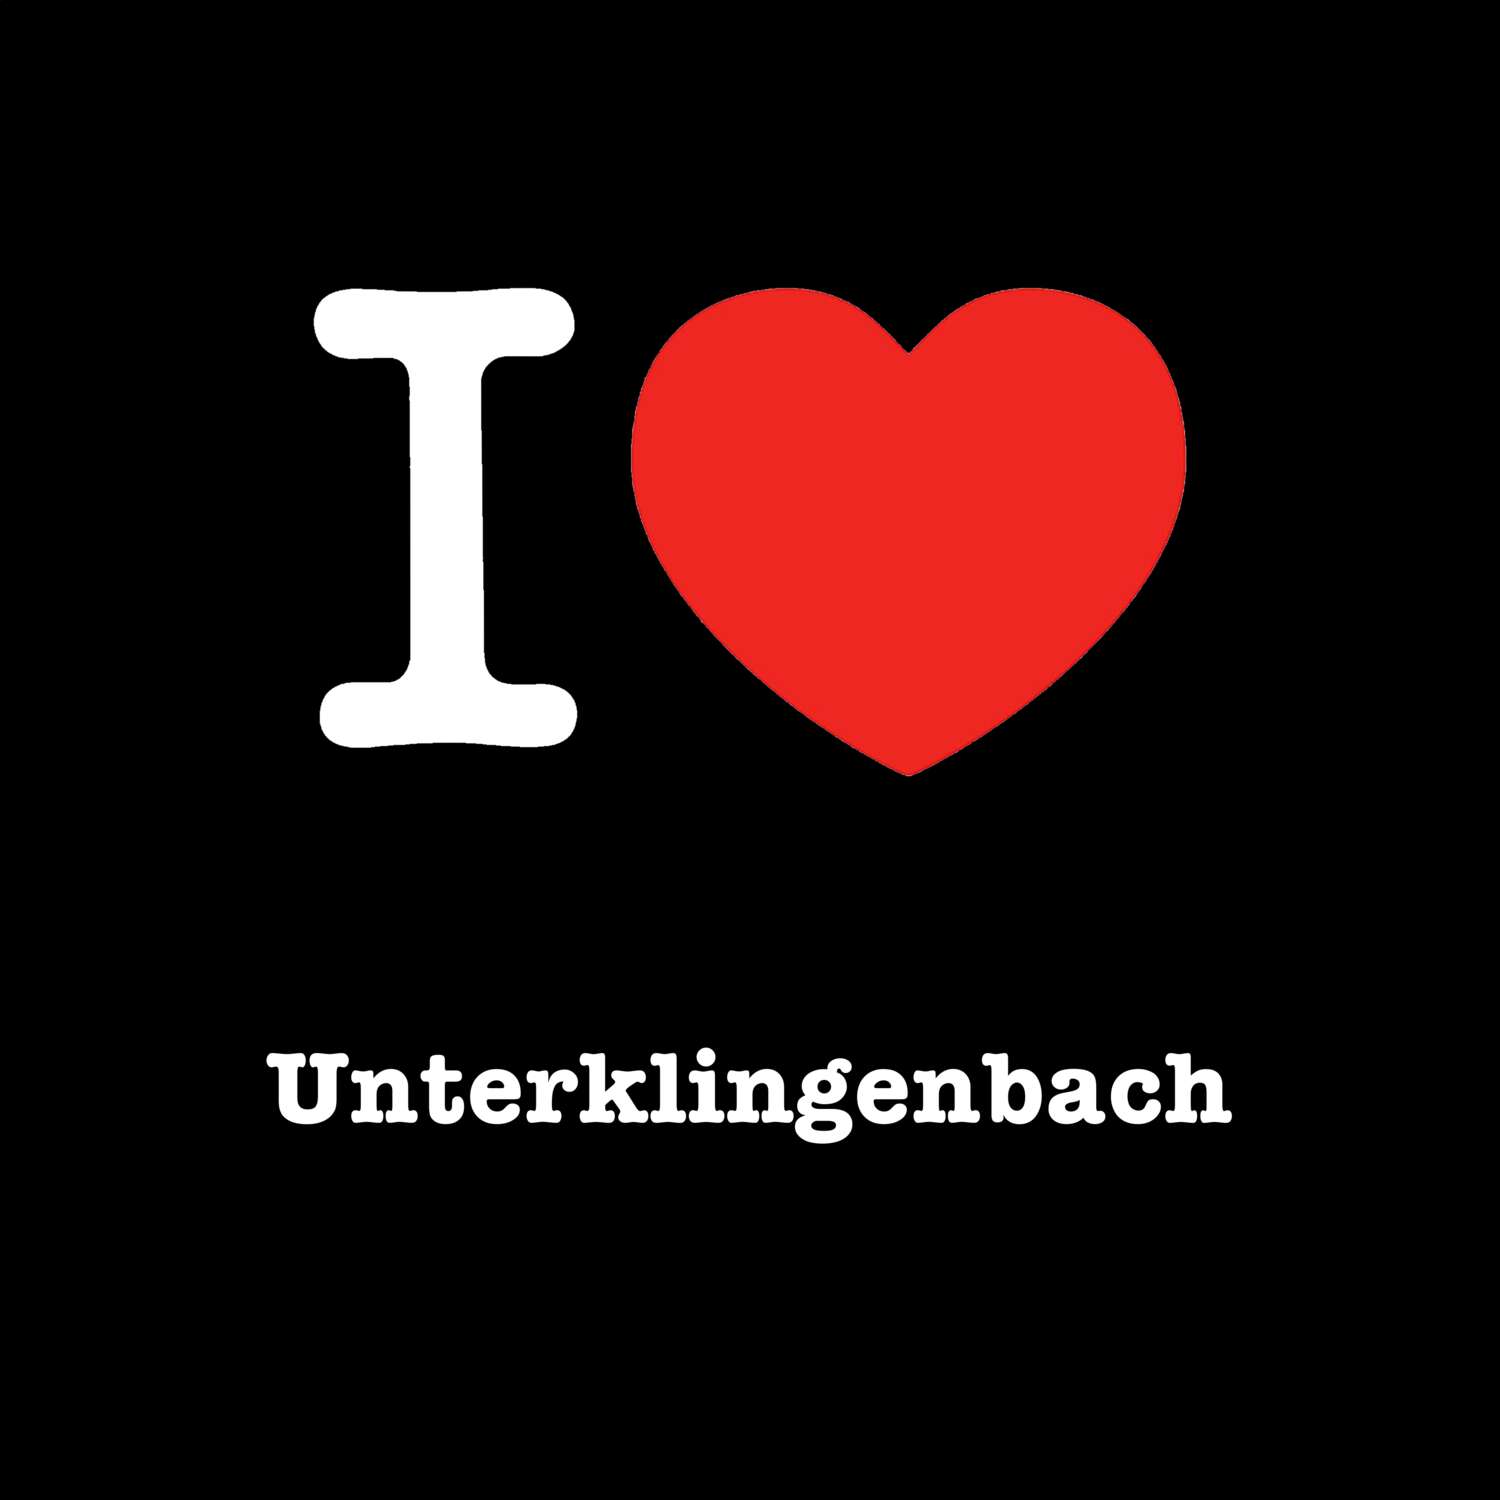 Unterklingenbach T-Shirt »I love«